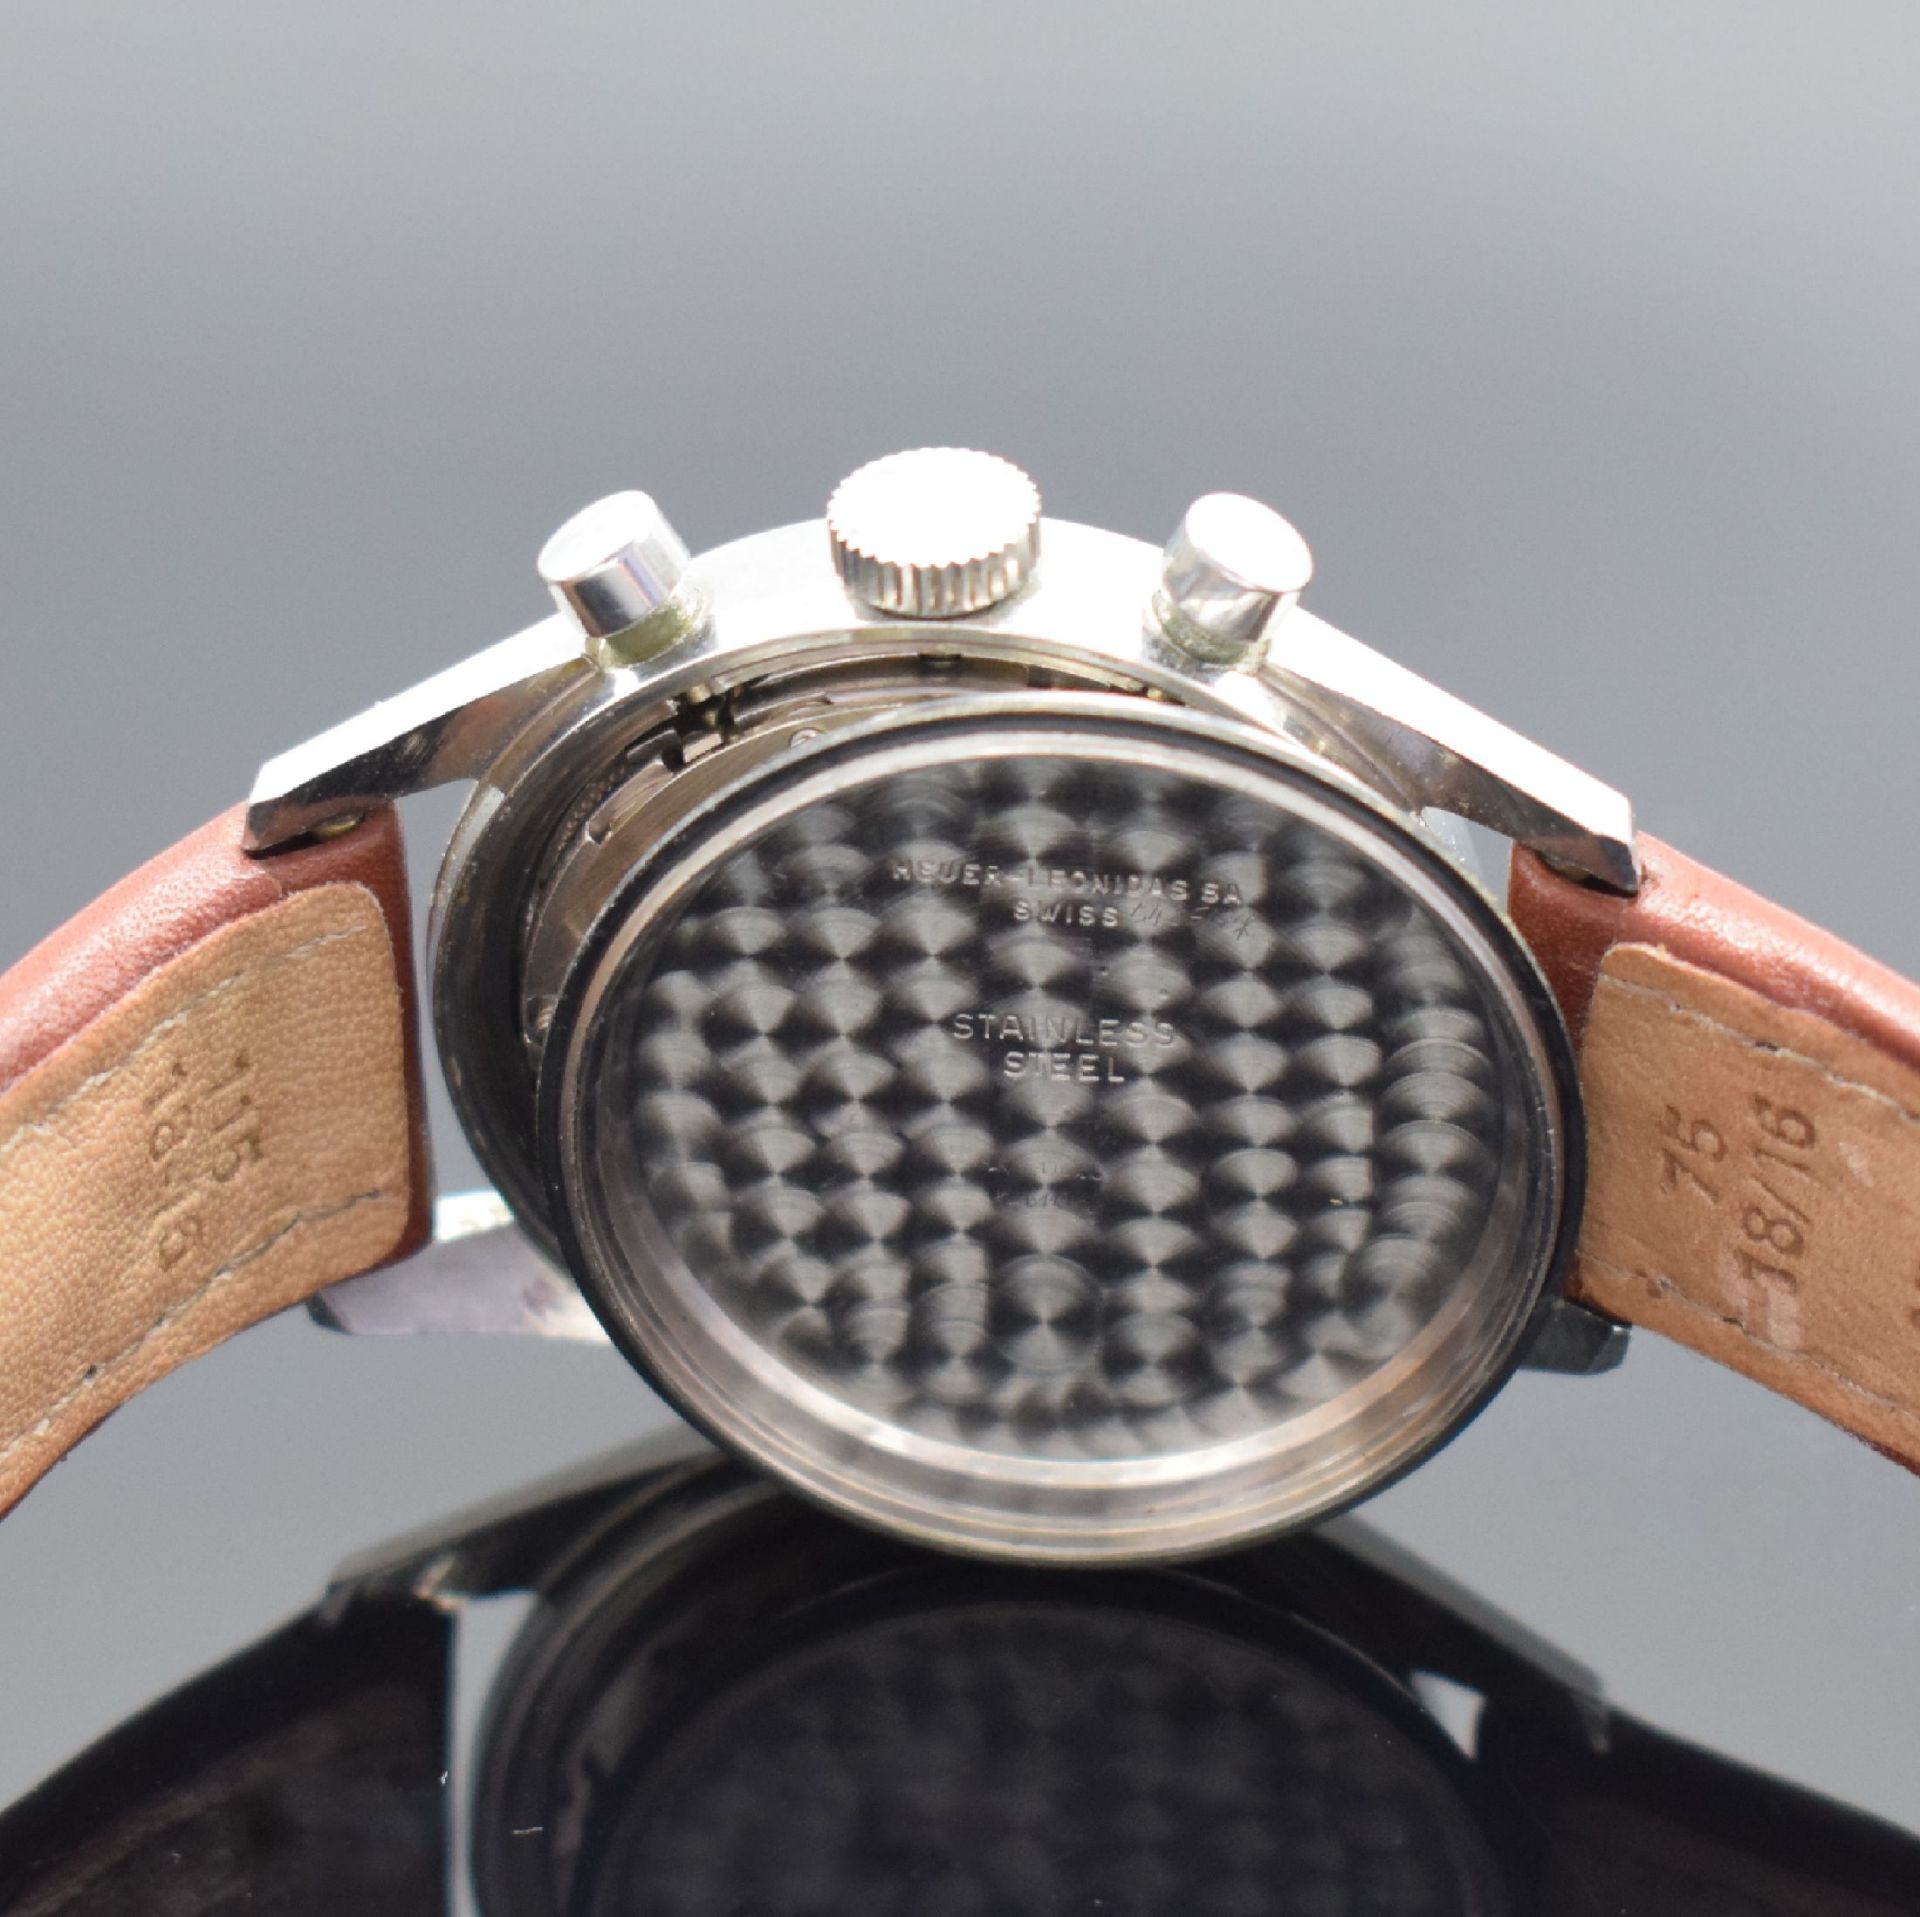 HEUER Carrera seltener, legendäre Schaltradchronograph - Image 7 of 7